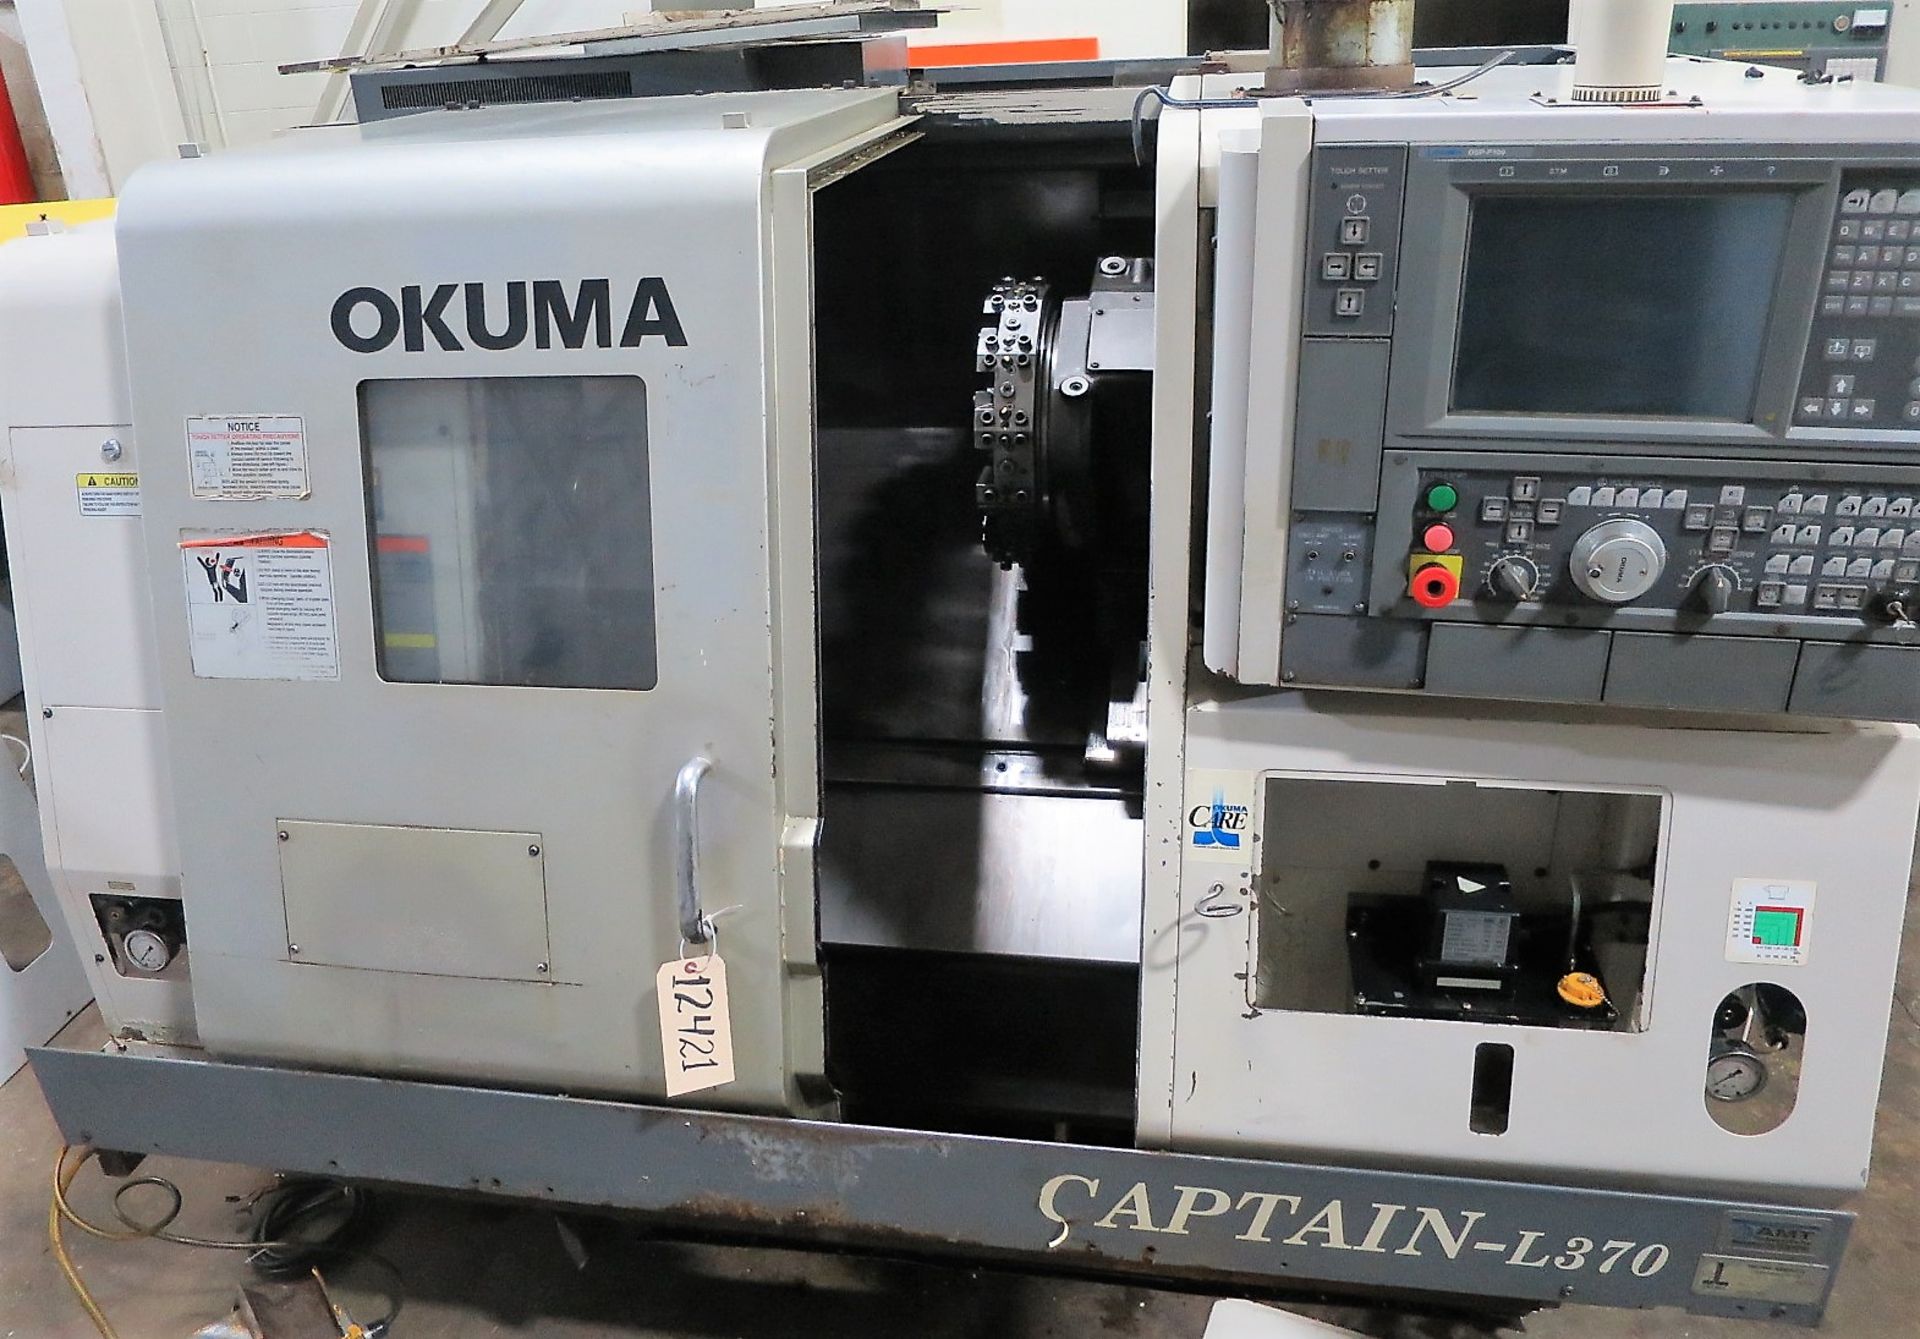 Okuma Captain L370 2-Axis CNC Turning Center Lathe, S/N 116573, New 2005